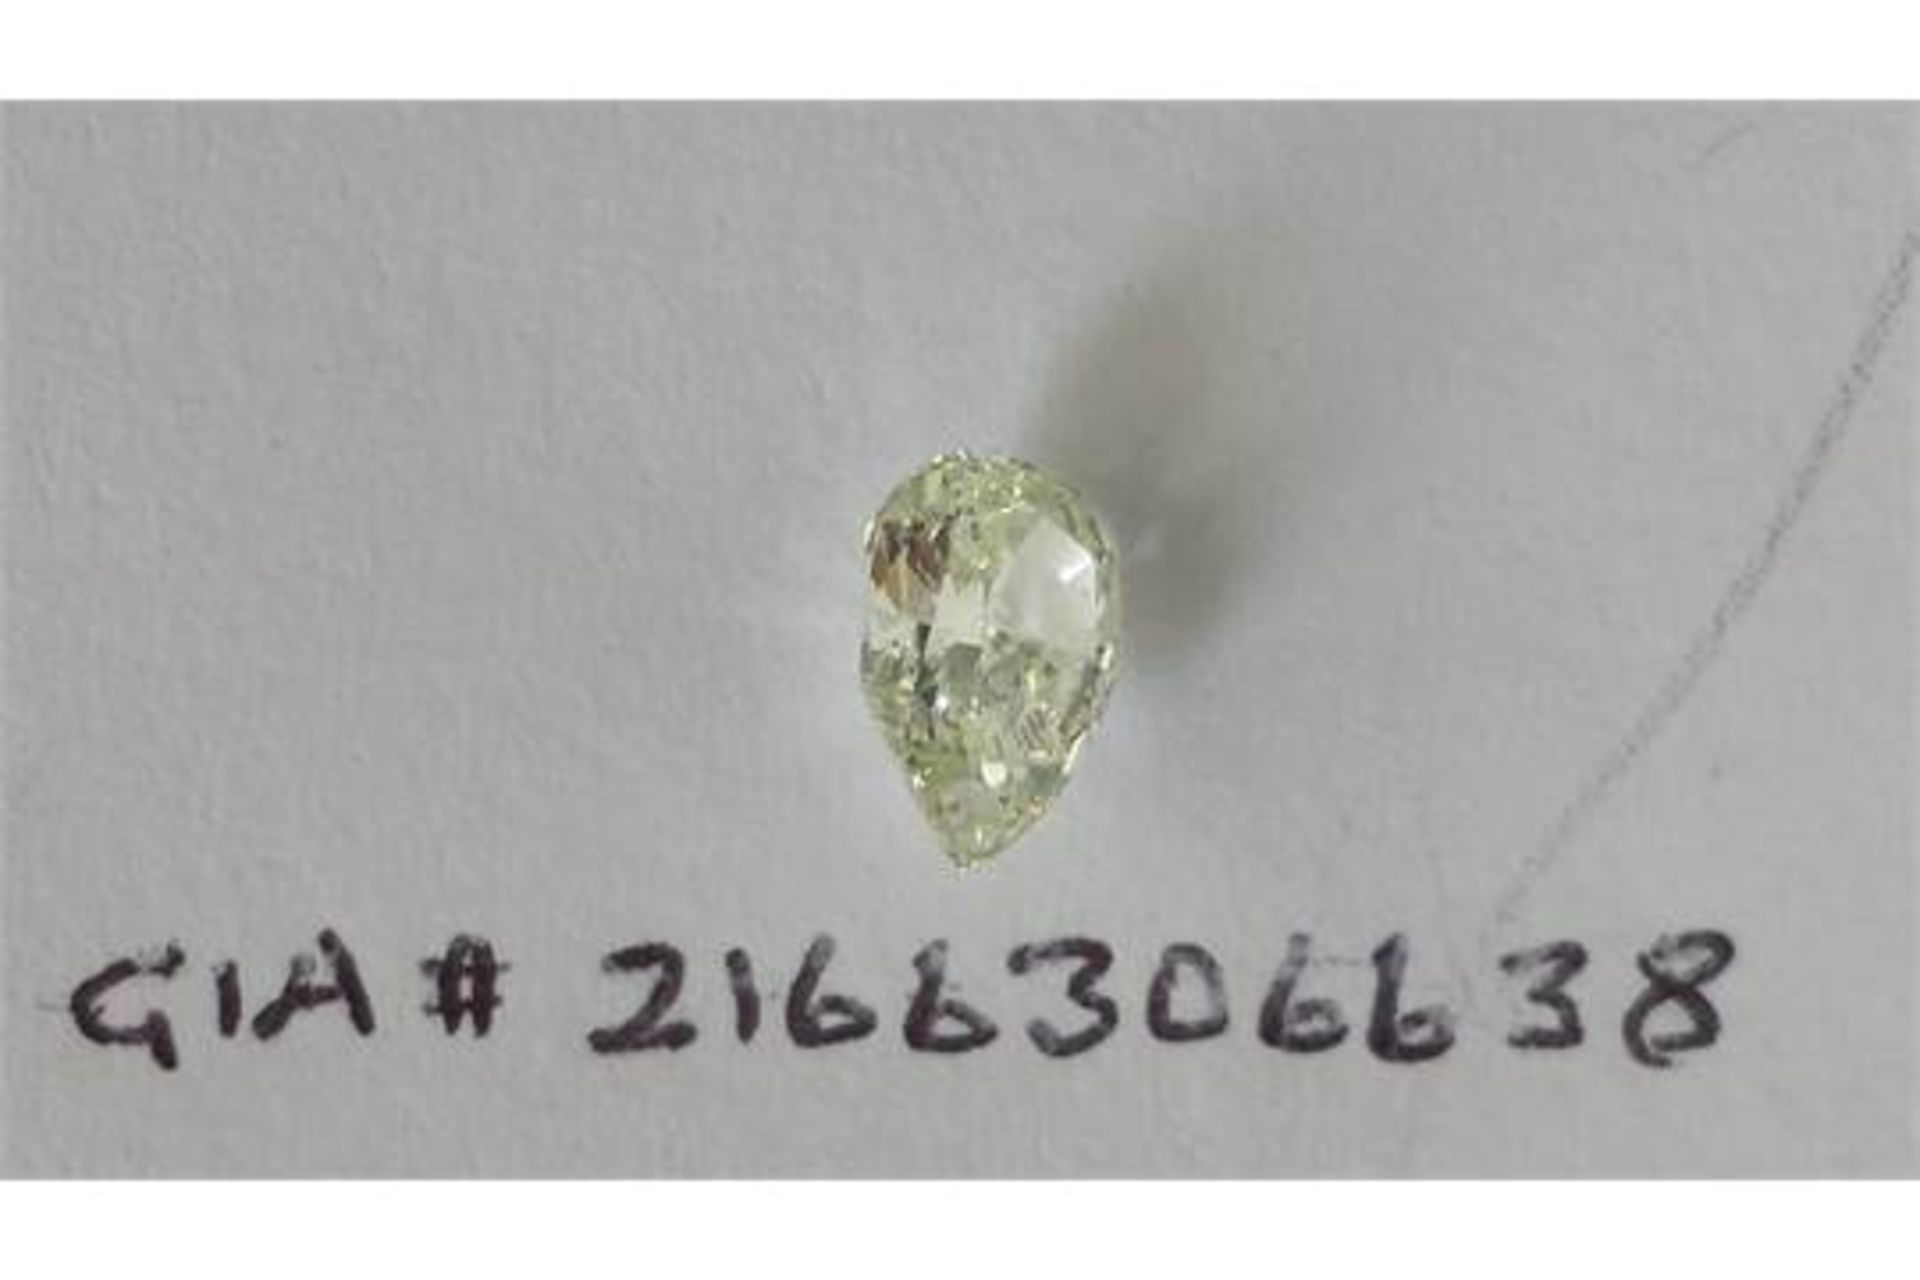 1.01 carat Pear Modified Brilliant Diamond - Image 2 of 4